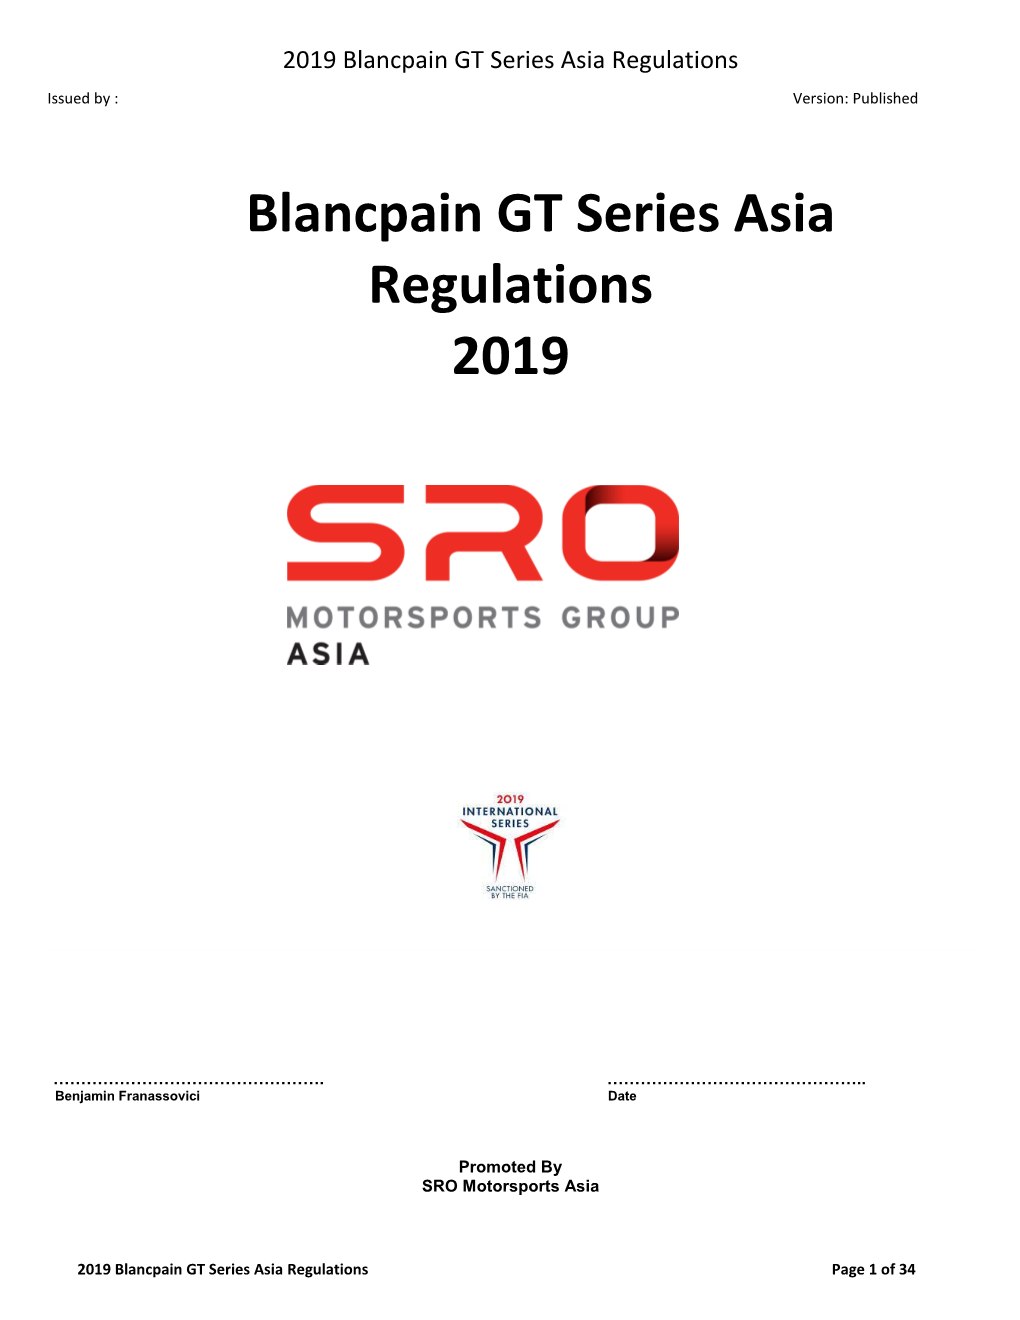 Blancpain GT Series Asia Regulations 2019